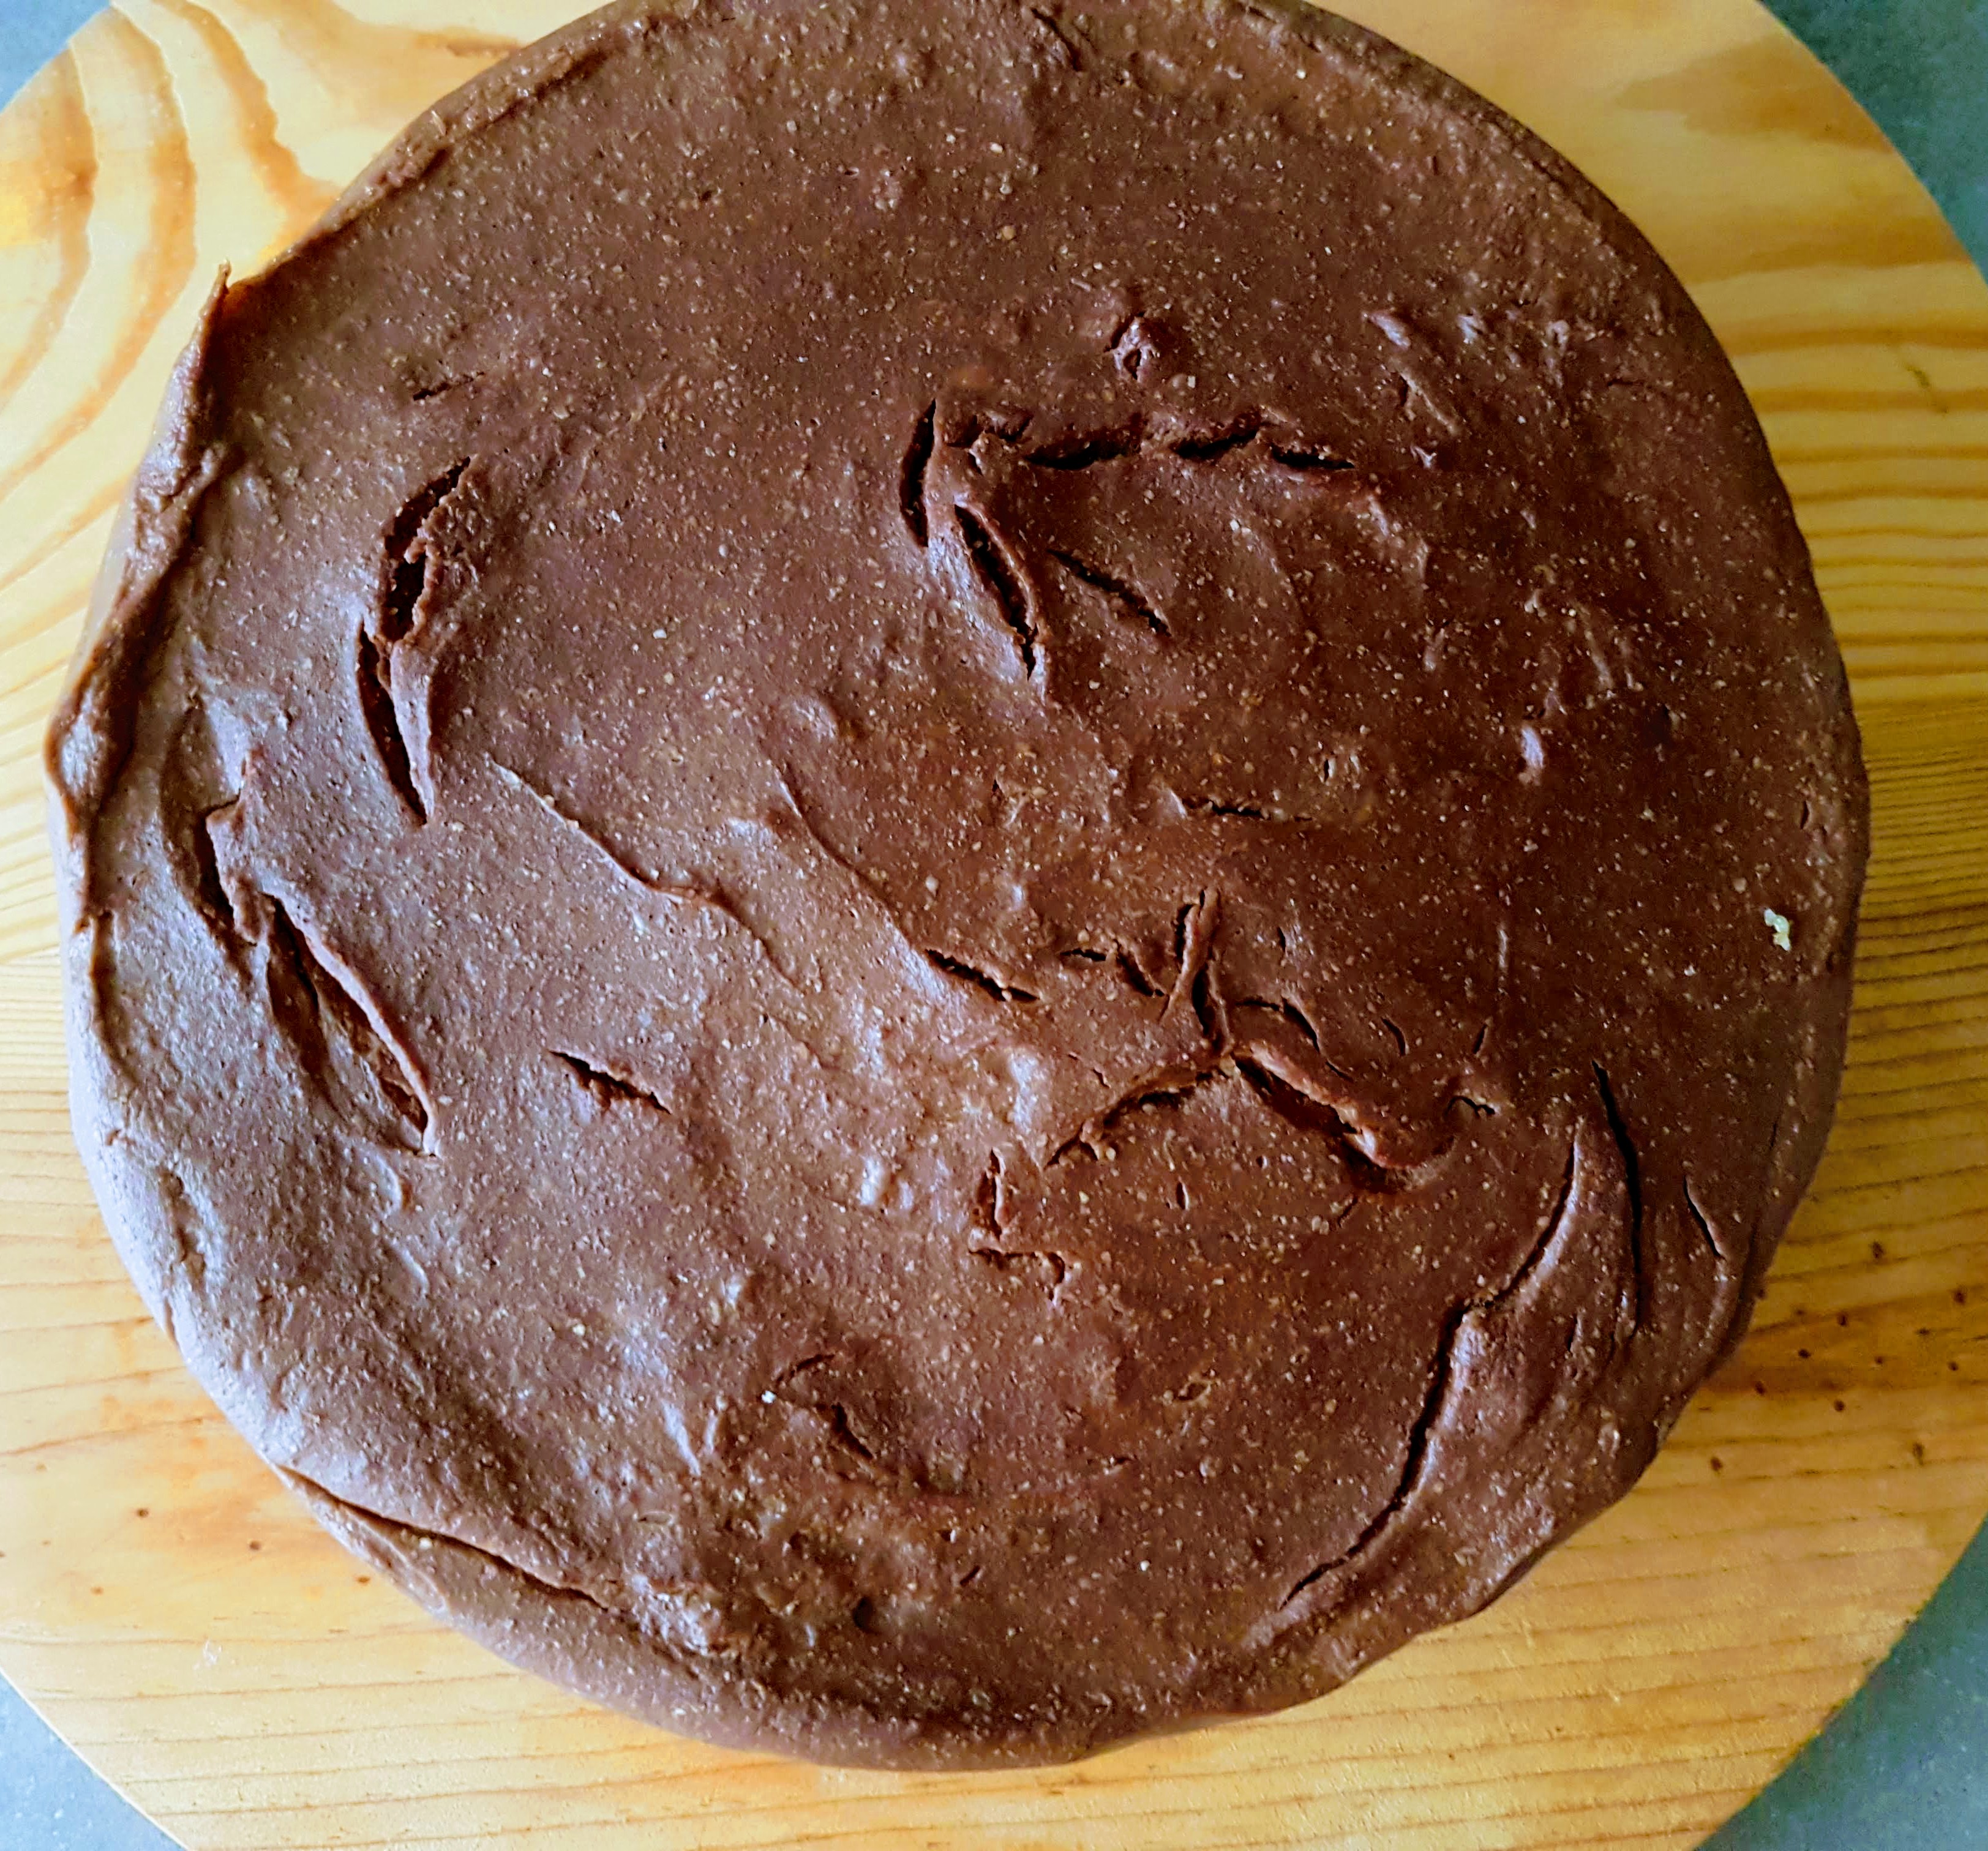 Desert tort de ciocolata cu faina din hrisca si sirop de artar